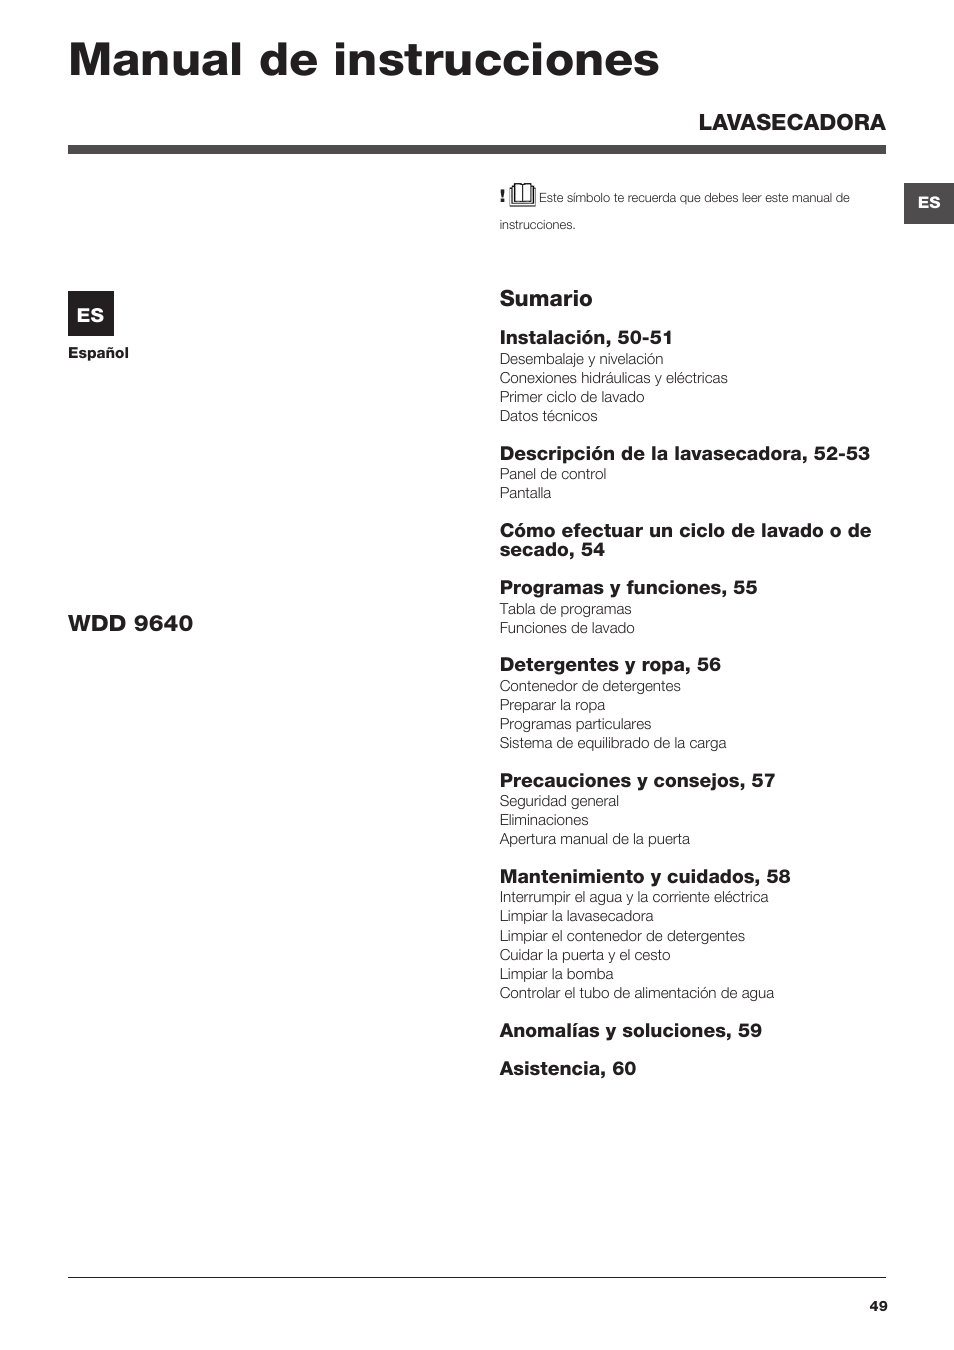 Manual de instrucciones, Sumario, Wdd 9640 | Hotpoint Ariston WDD 9640B EU  User Manual | Page 49 / 84 | Original mode